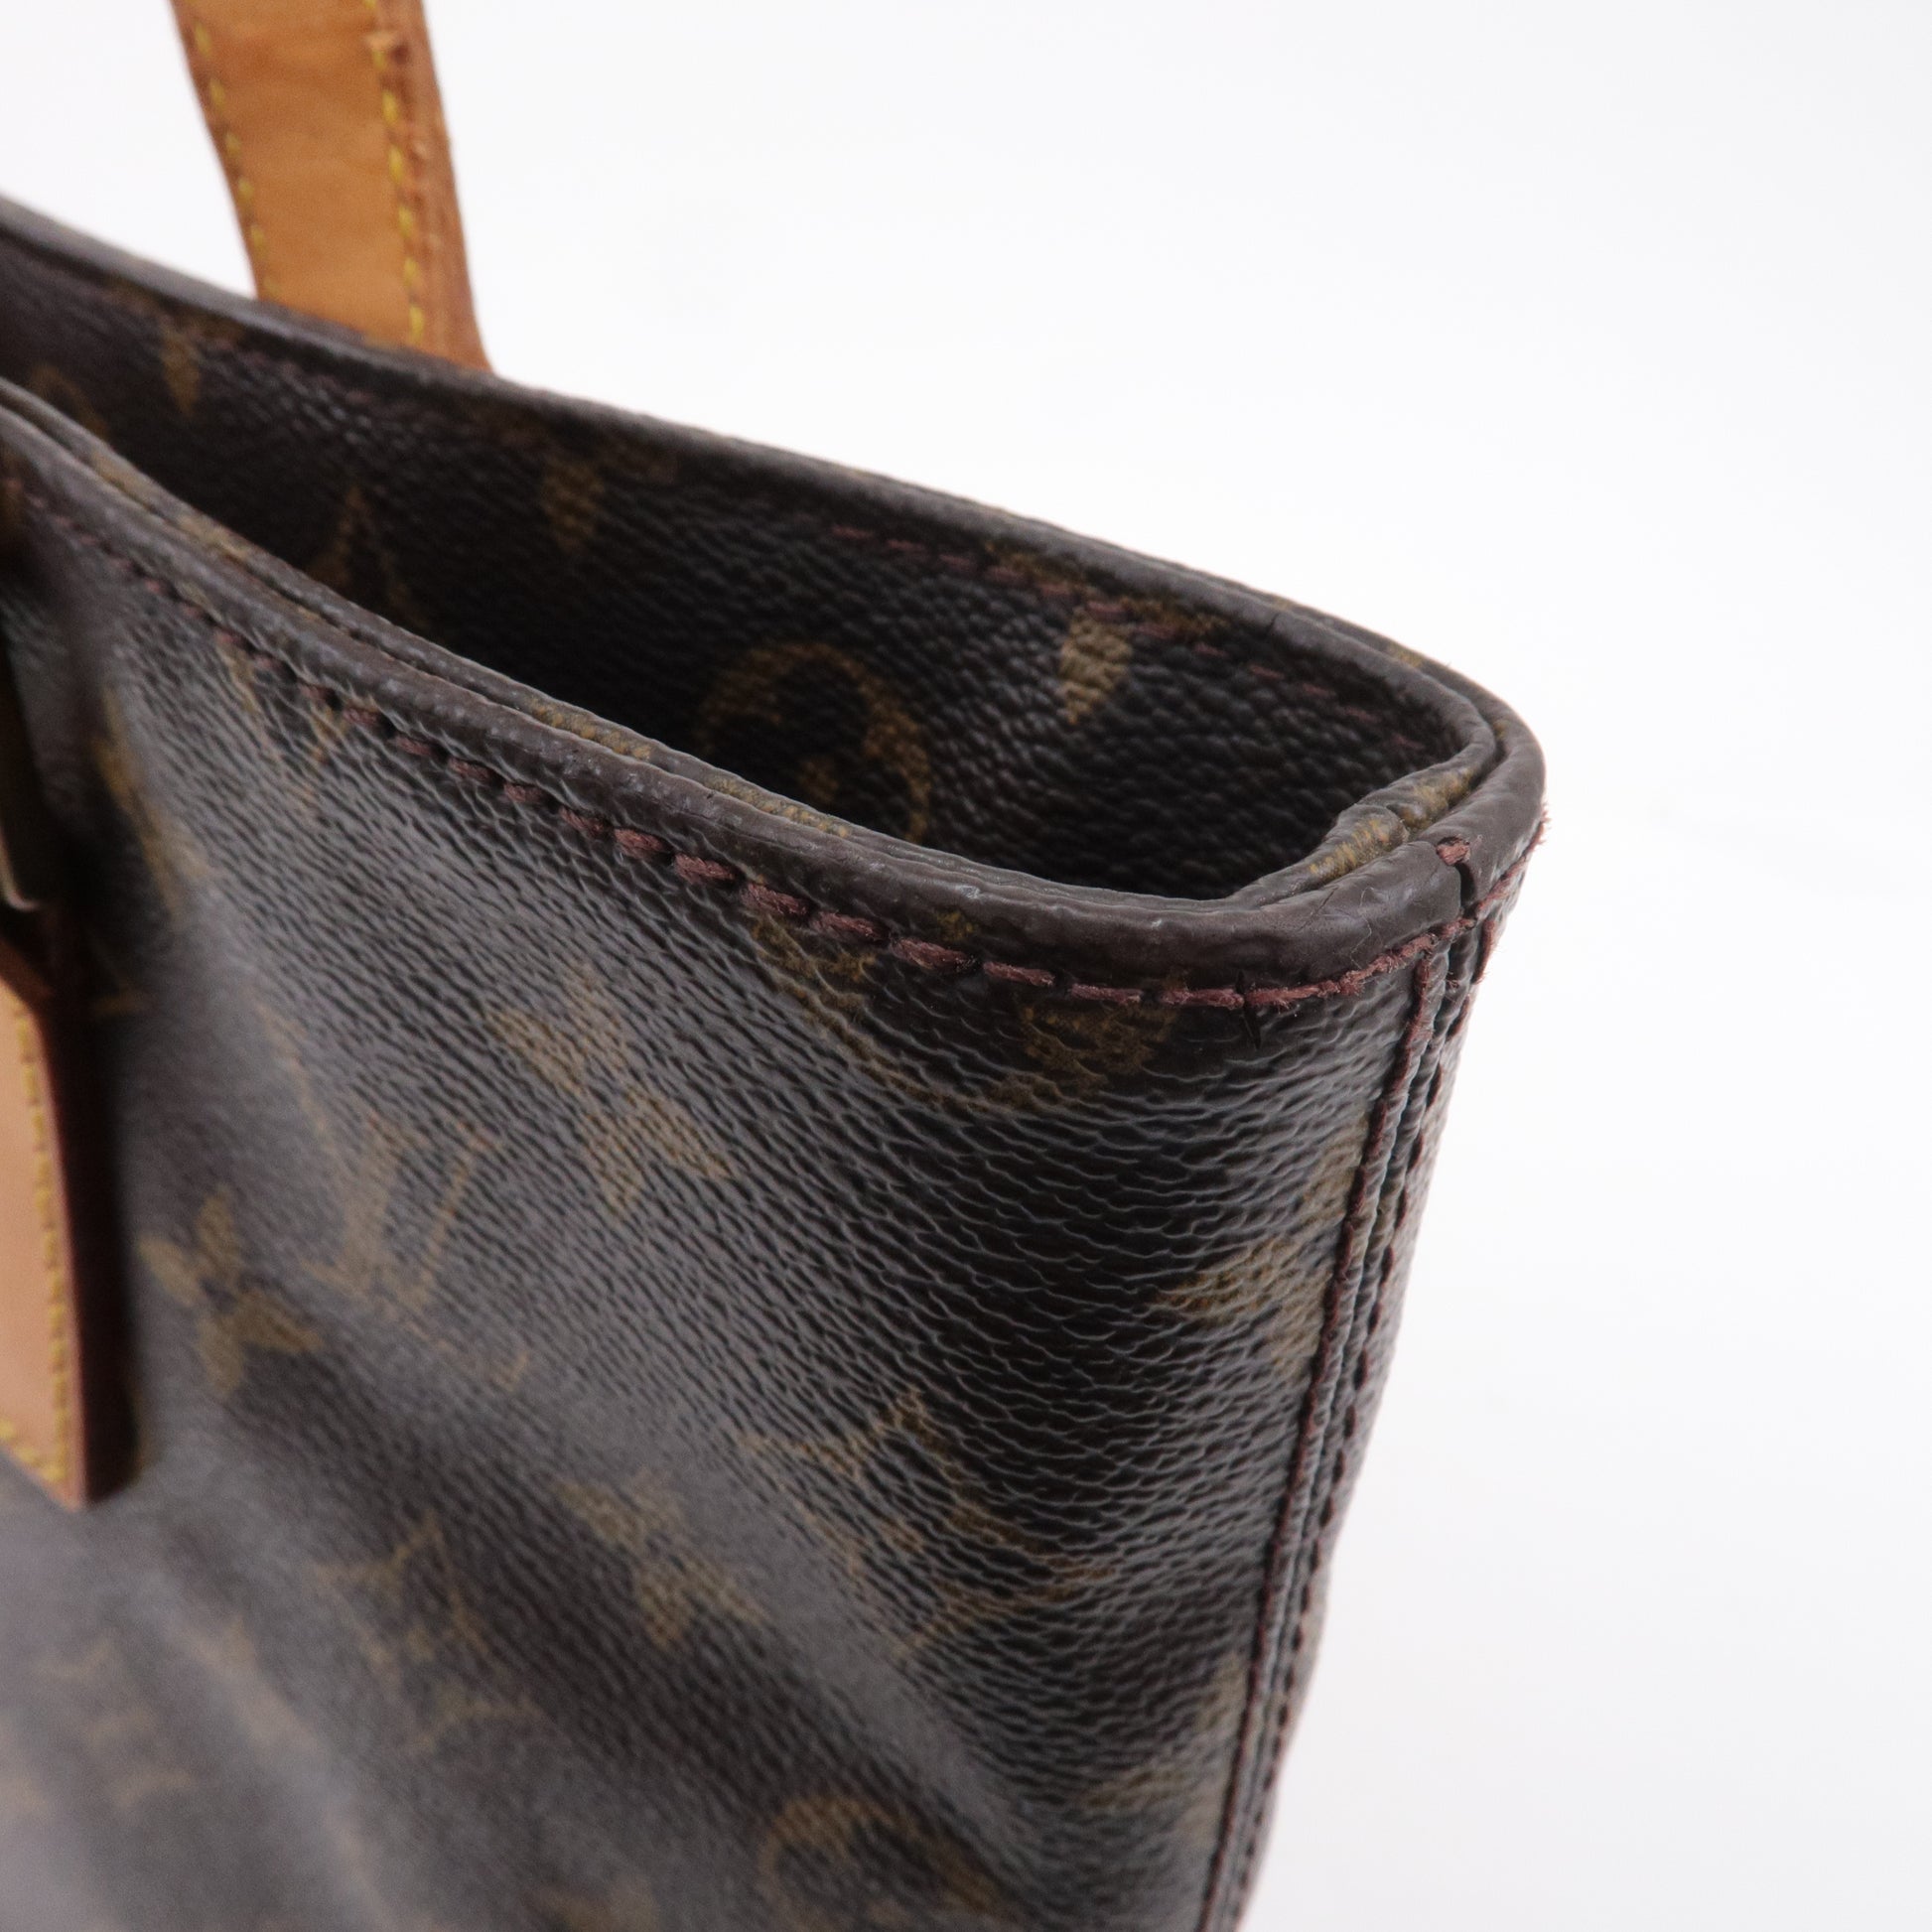 Louis-Vuitton-Monogram-Vavin-GM-Tote-Bag-Hand-Bag-M51170 – dct